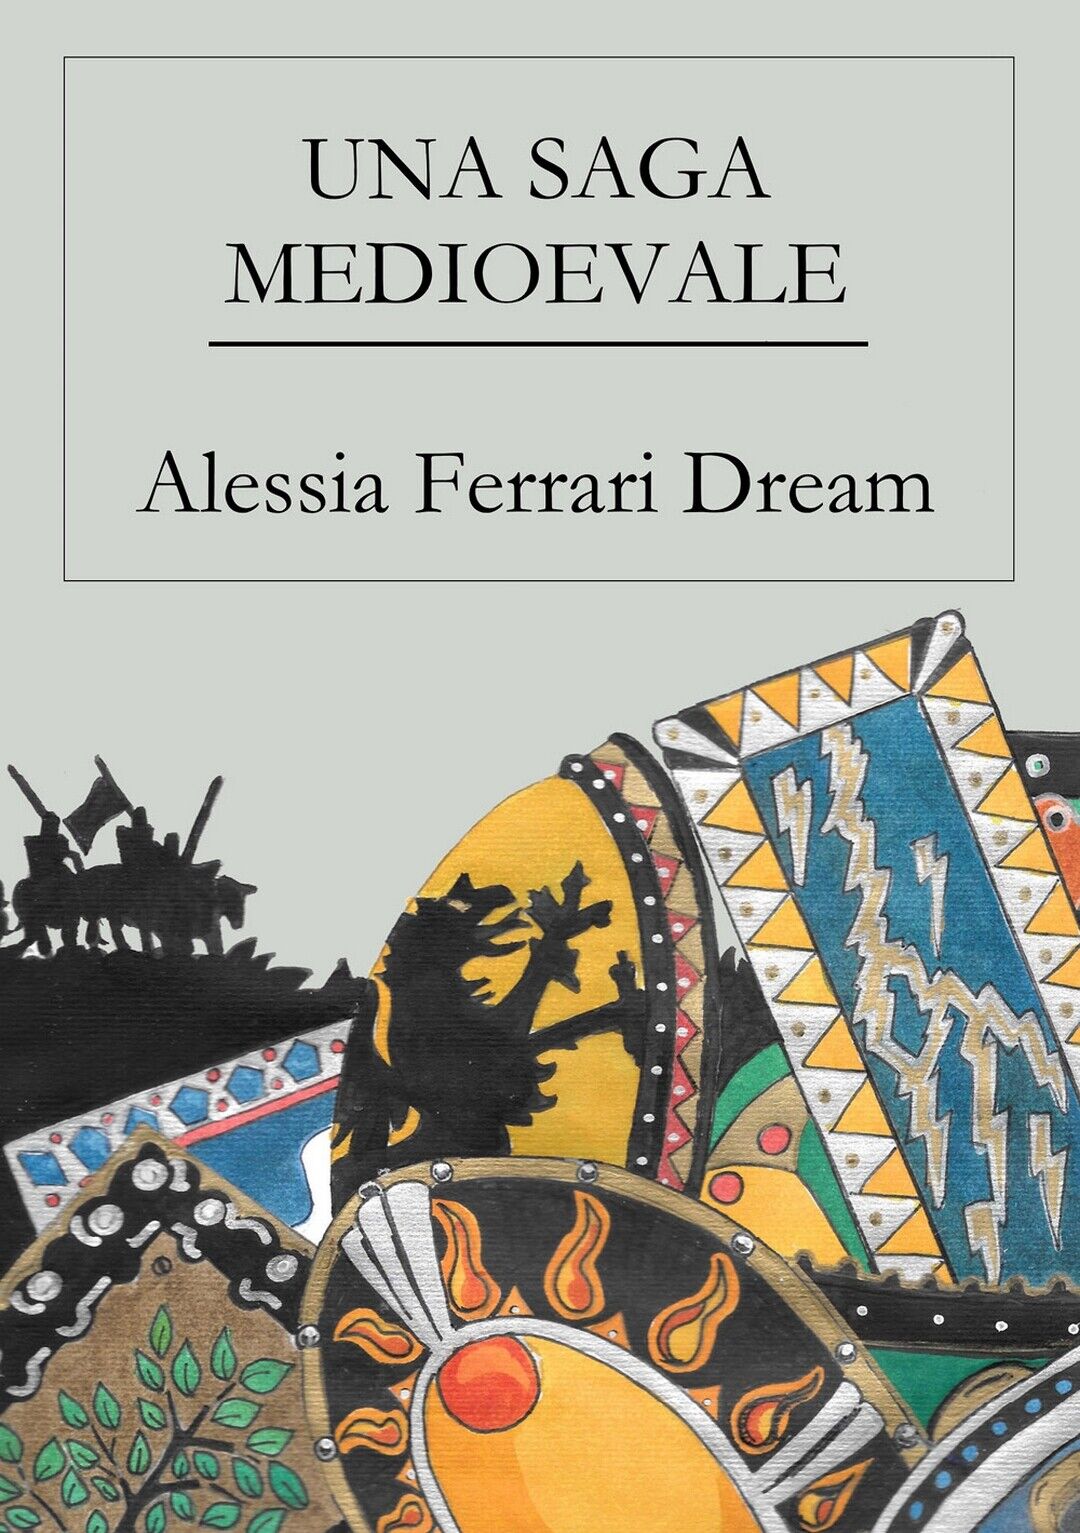 Una saga medioevale  di Alessia Ferrari Dream,  2018,  Youcanprint